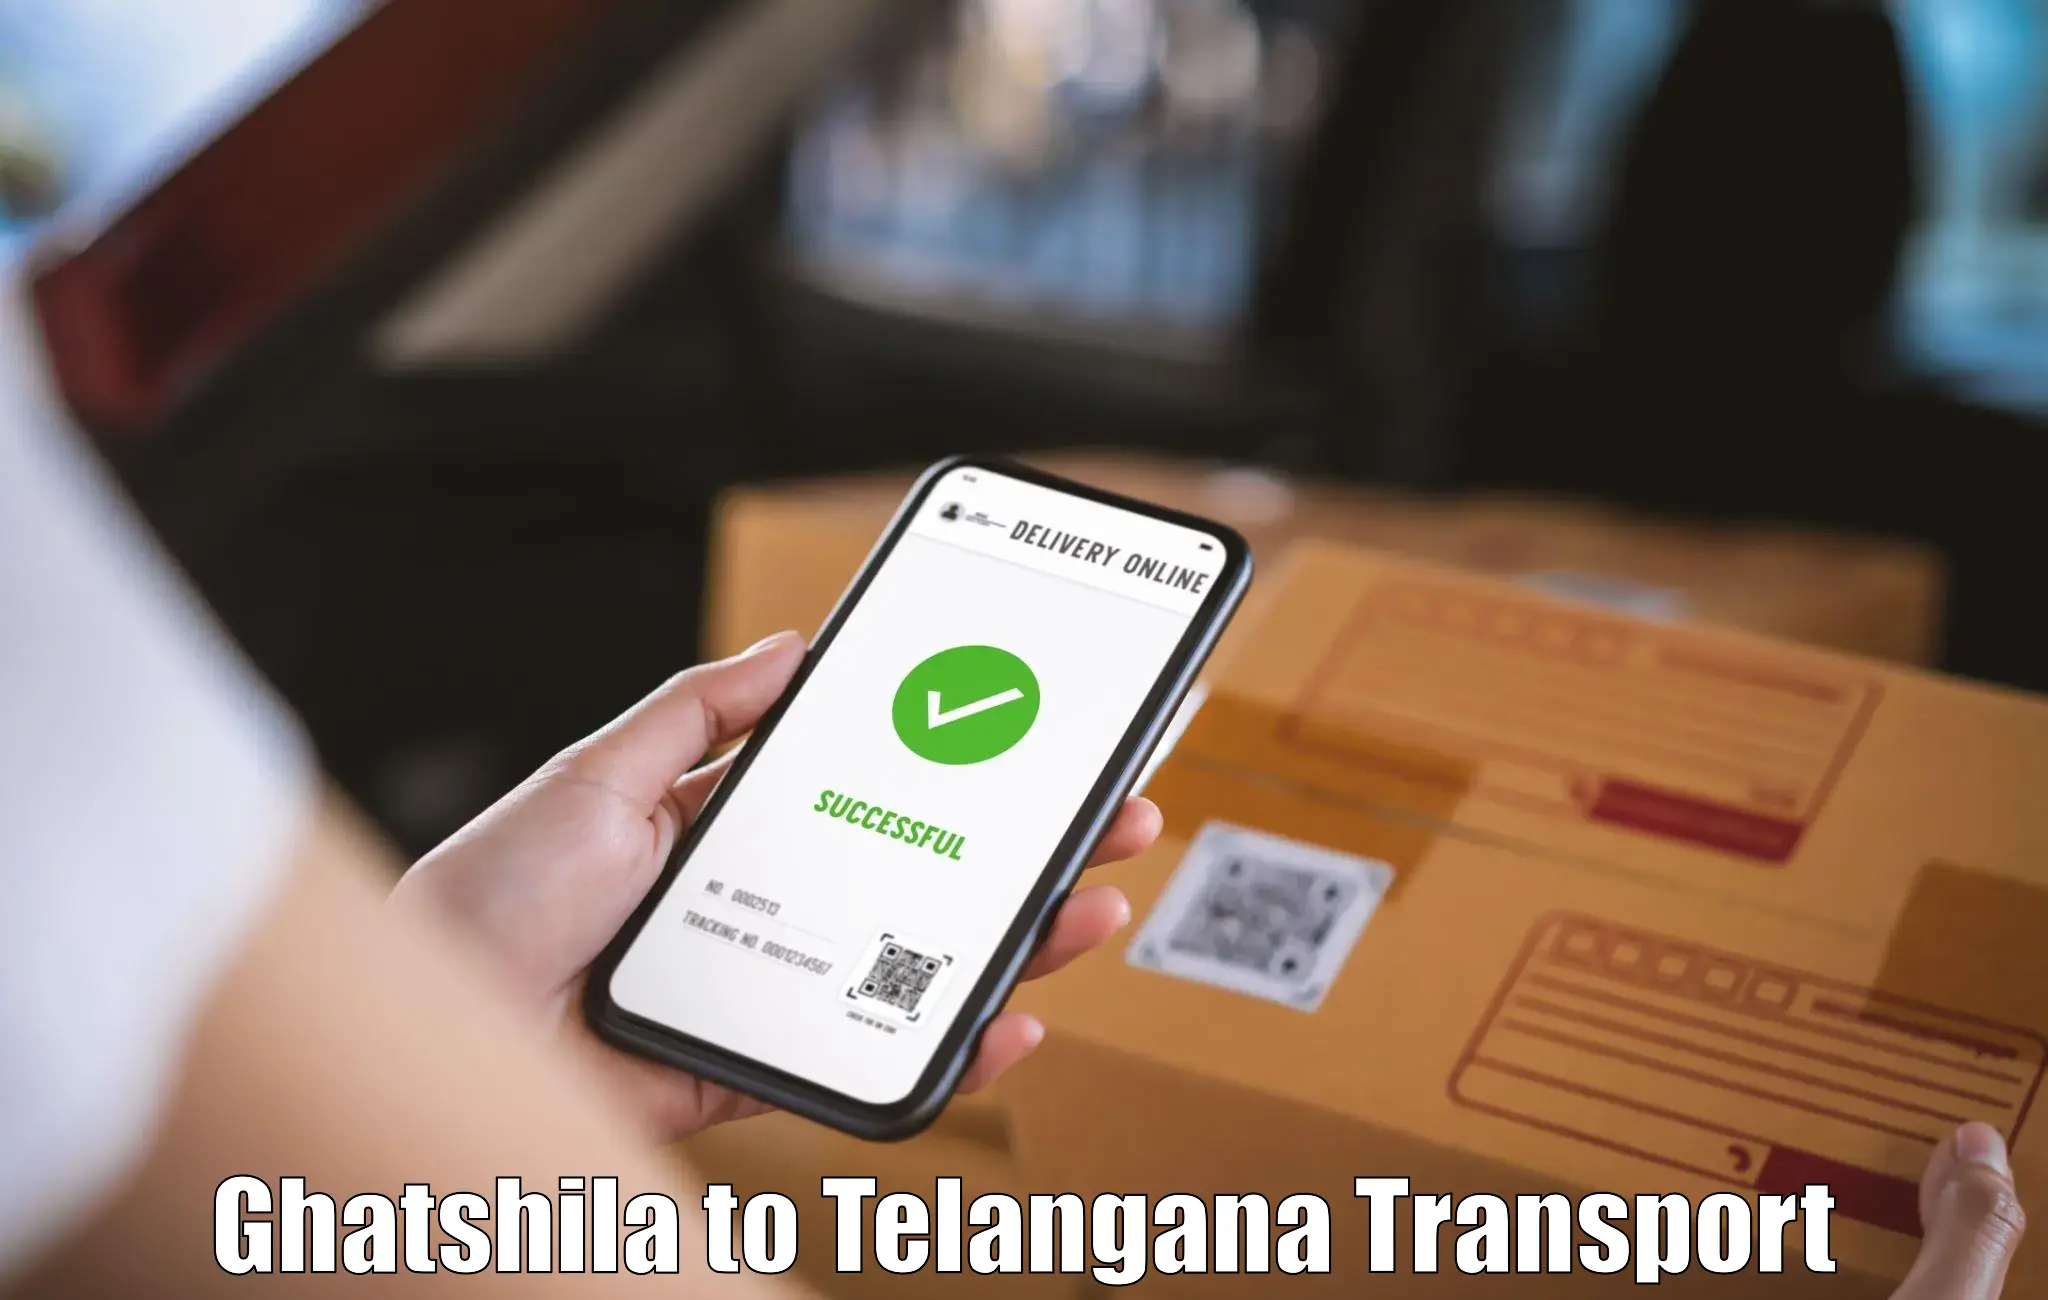 Commercial transport service Ghatshila to Sangareddy